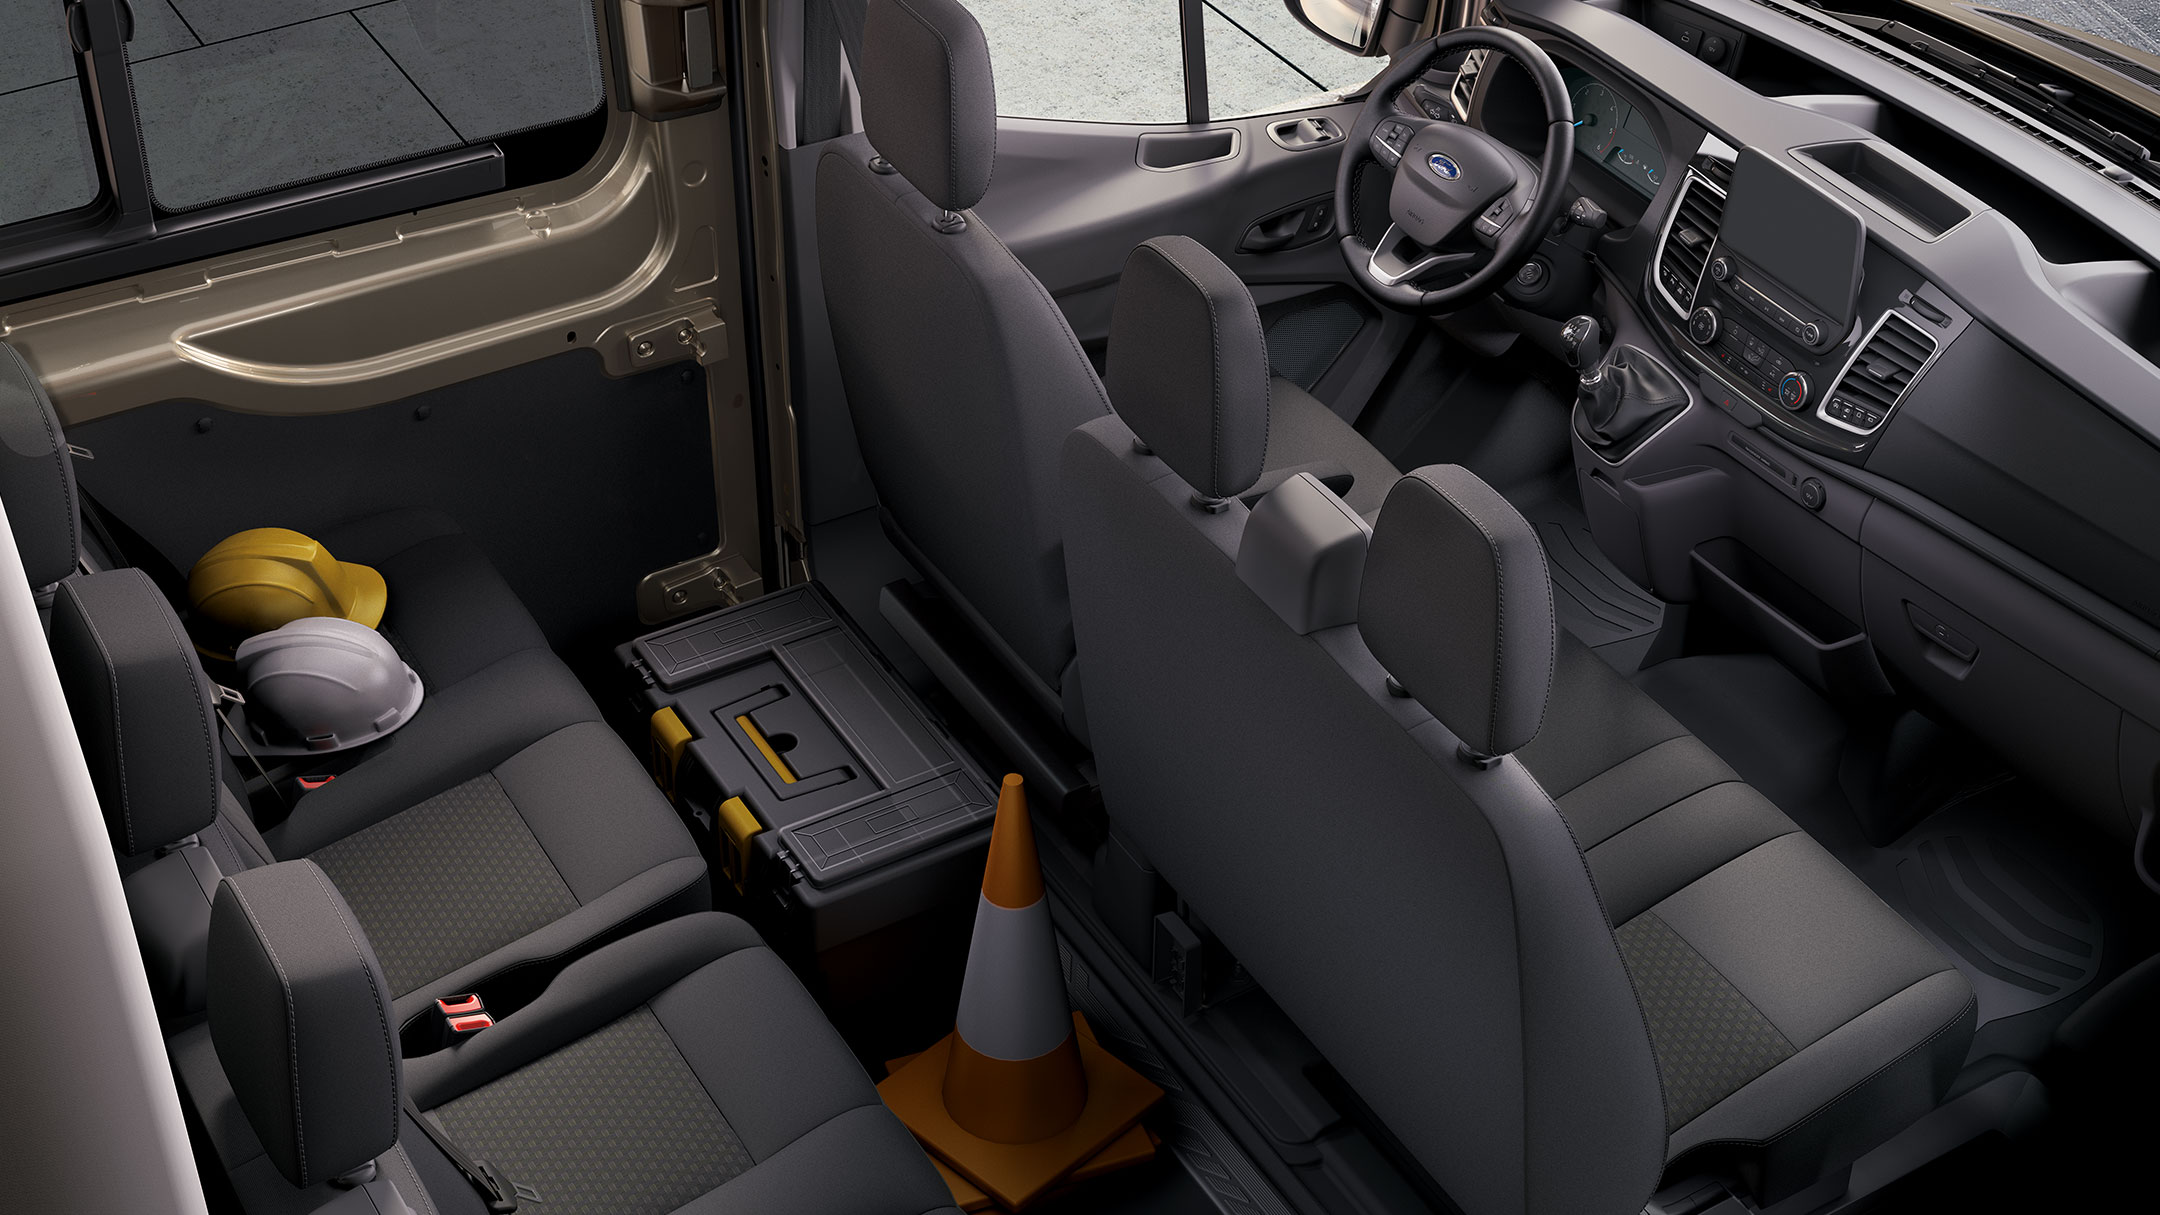 New Ford Transit Van interior cabin 